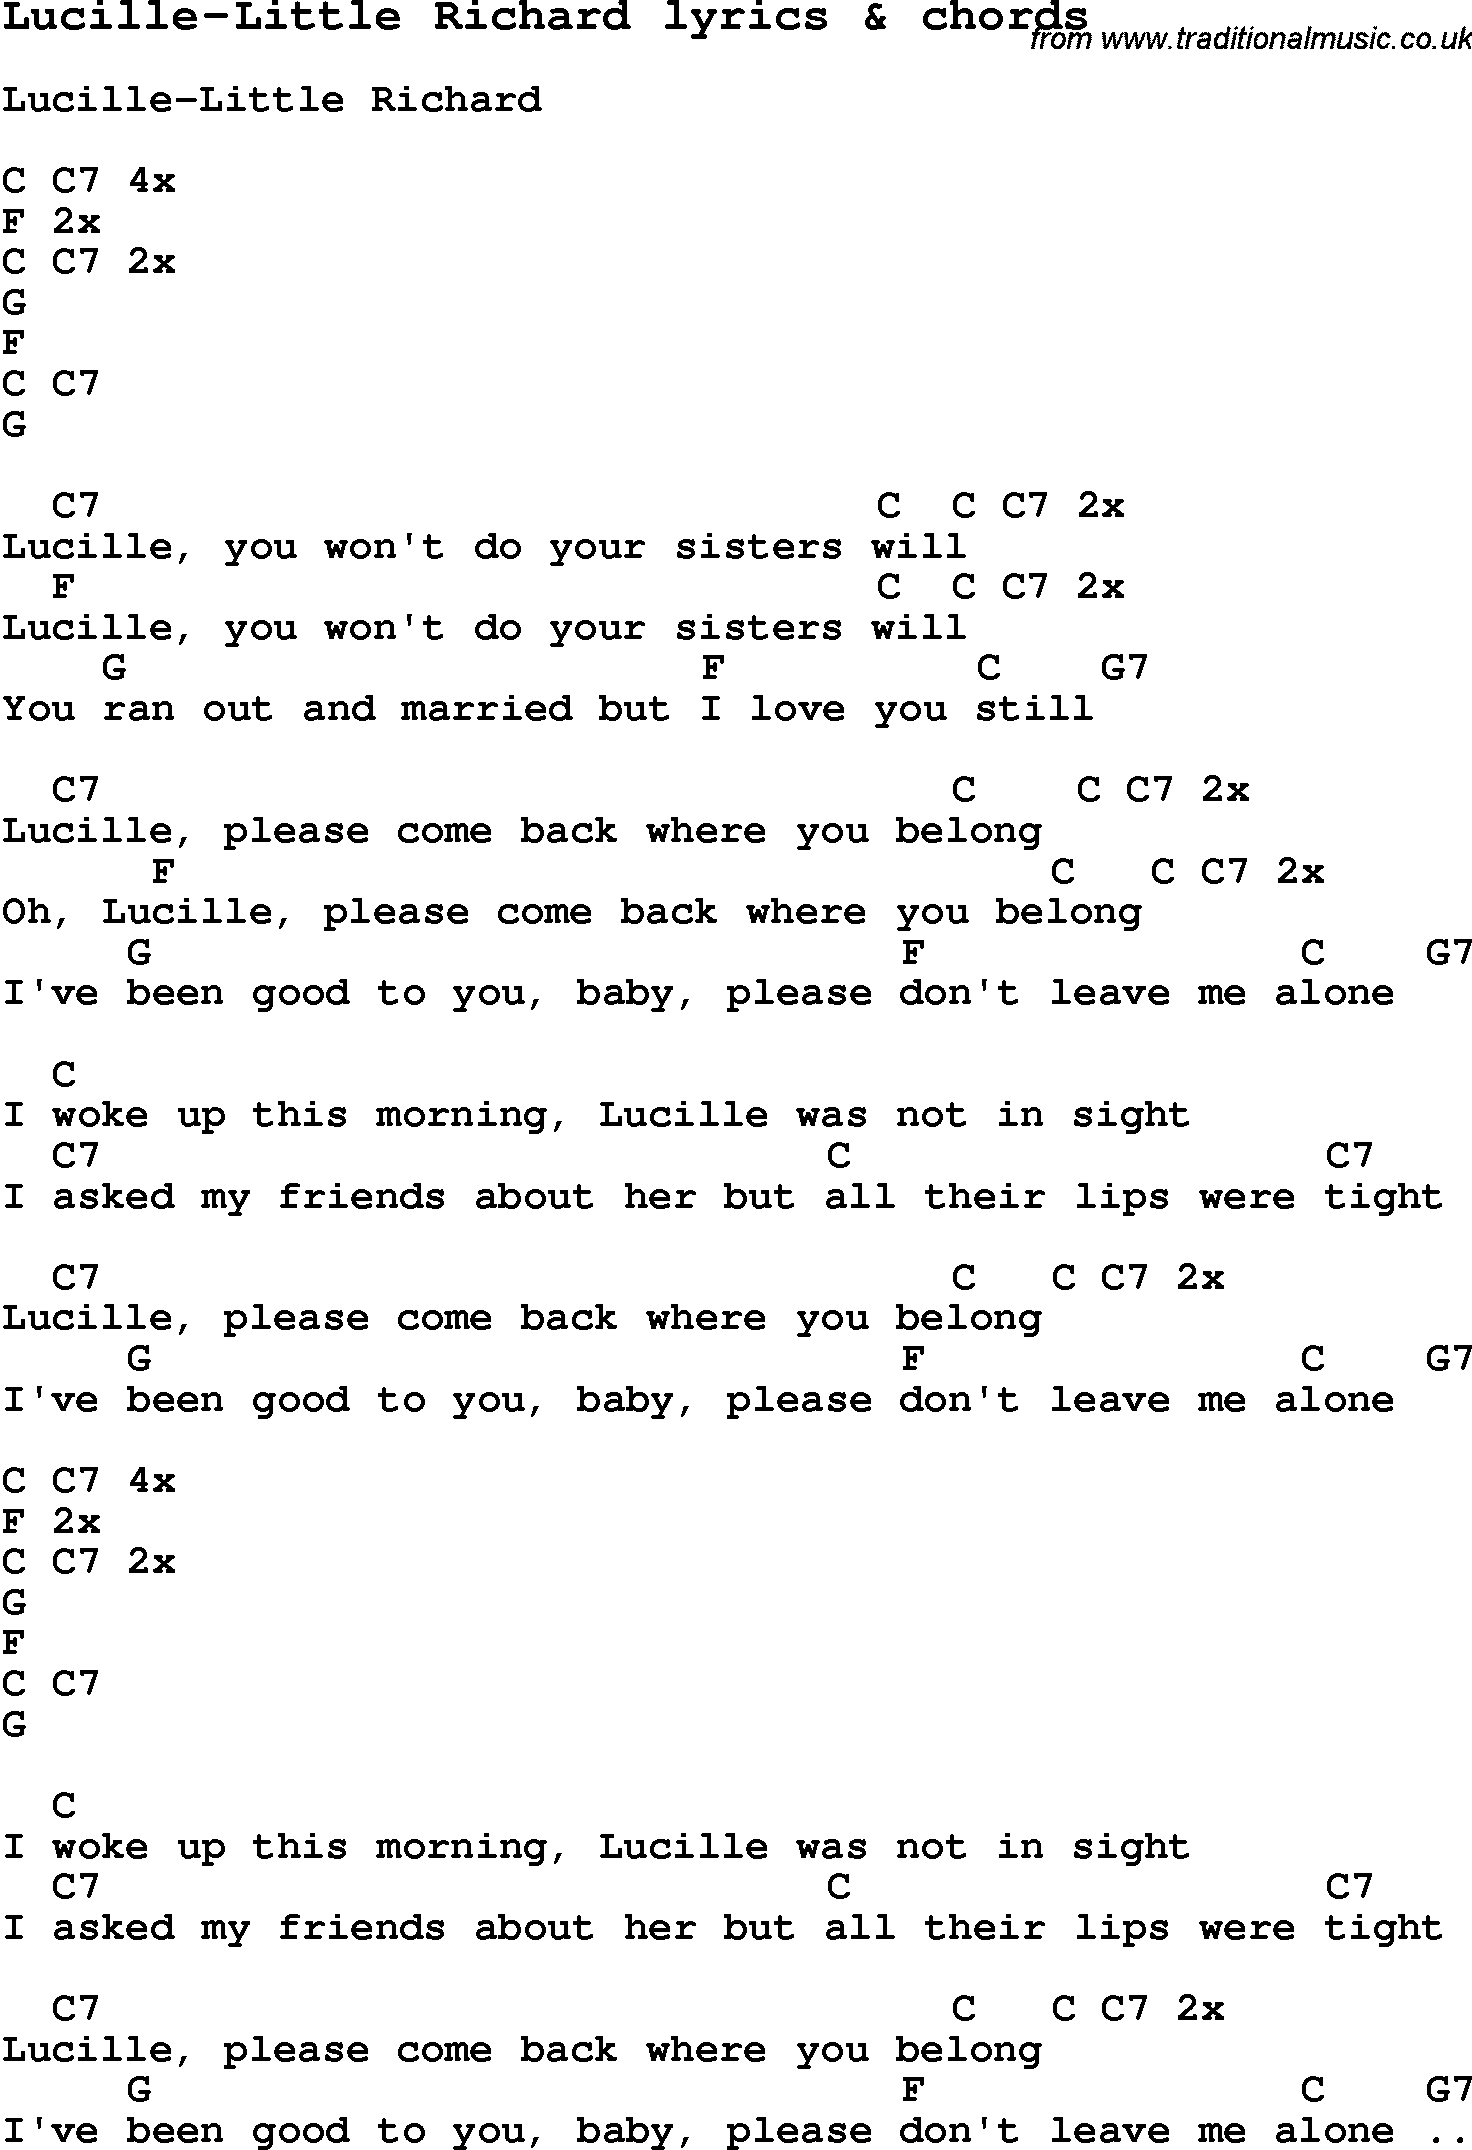 Love Song Lyrics for: Lucille-Little Richard with chords for Ukulele, Guitar Banjo etc.